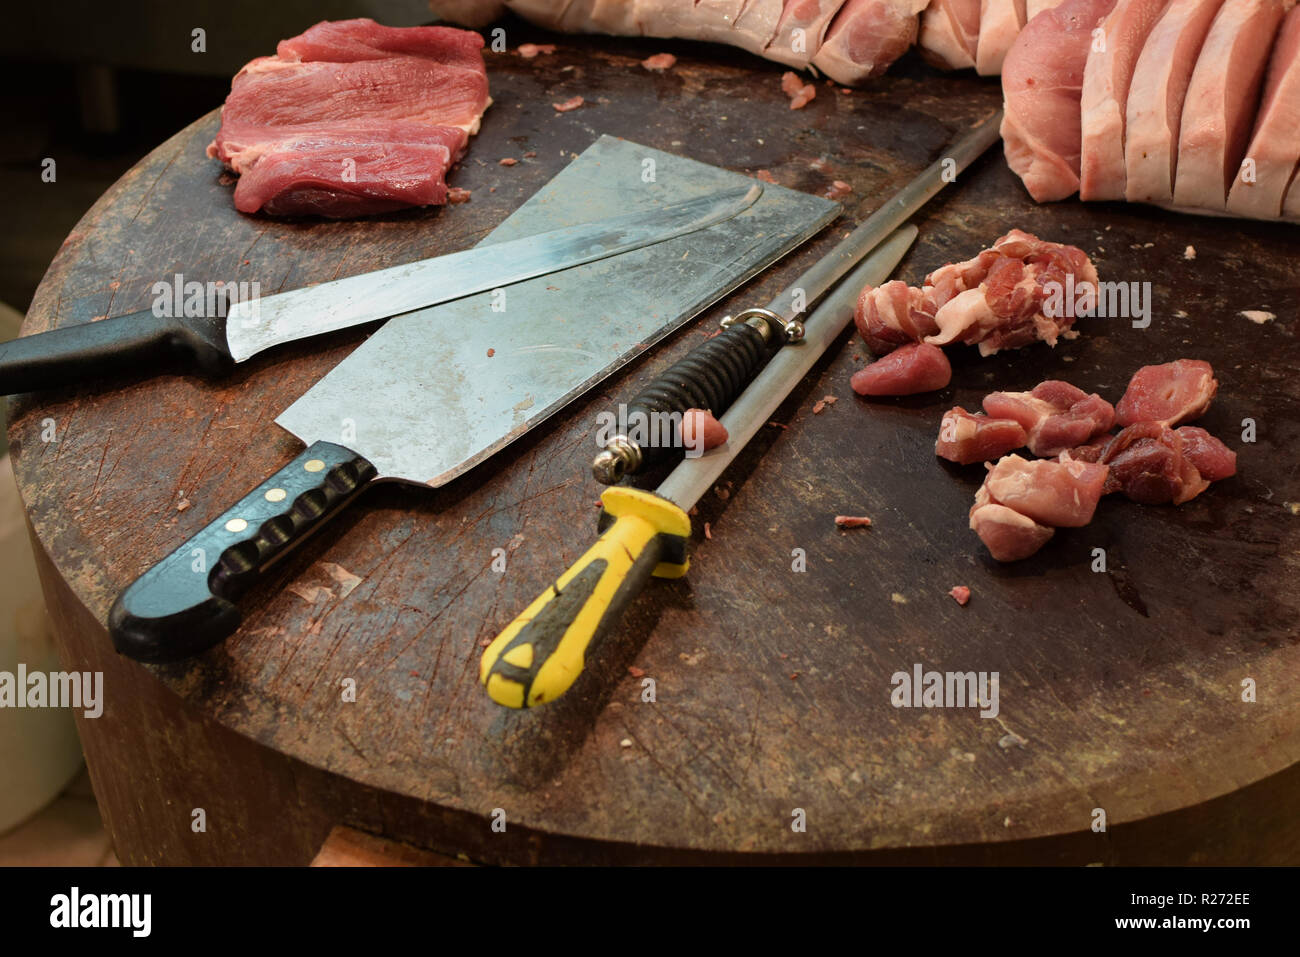 Vintage Meat Knife, Knife Chopper, Butcher Knife, Meat Chopper